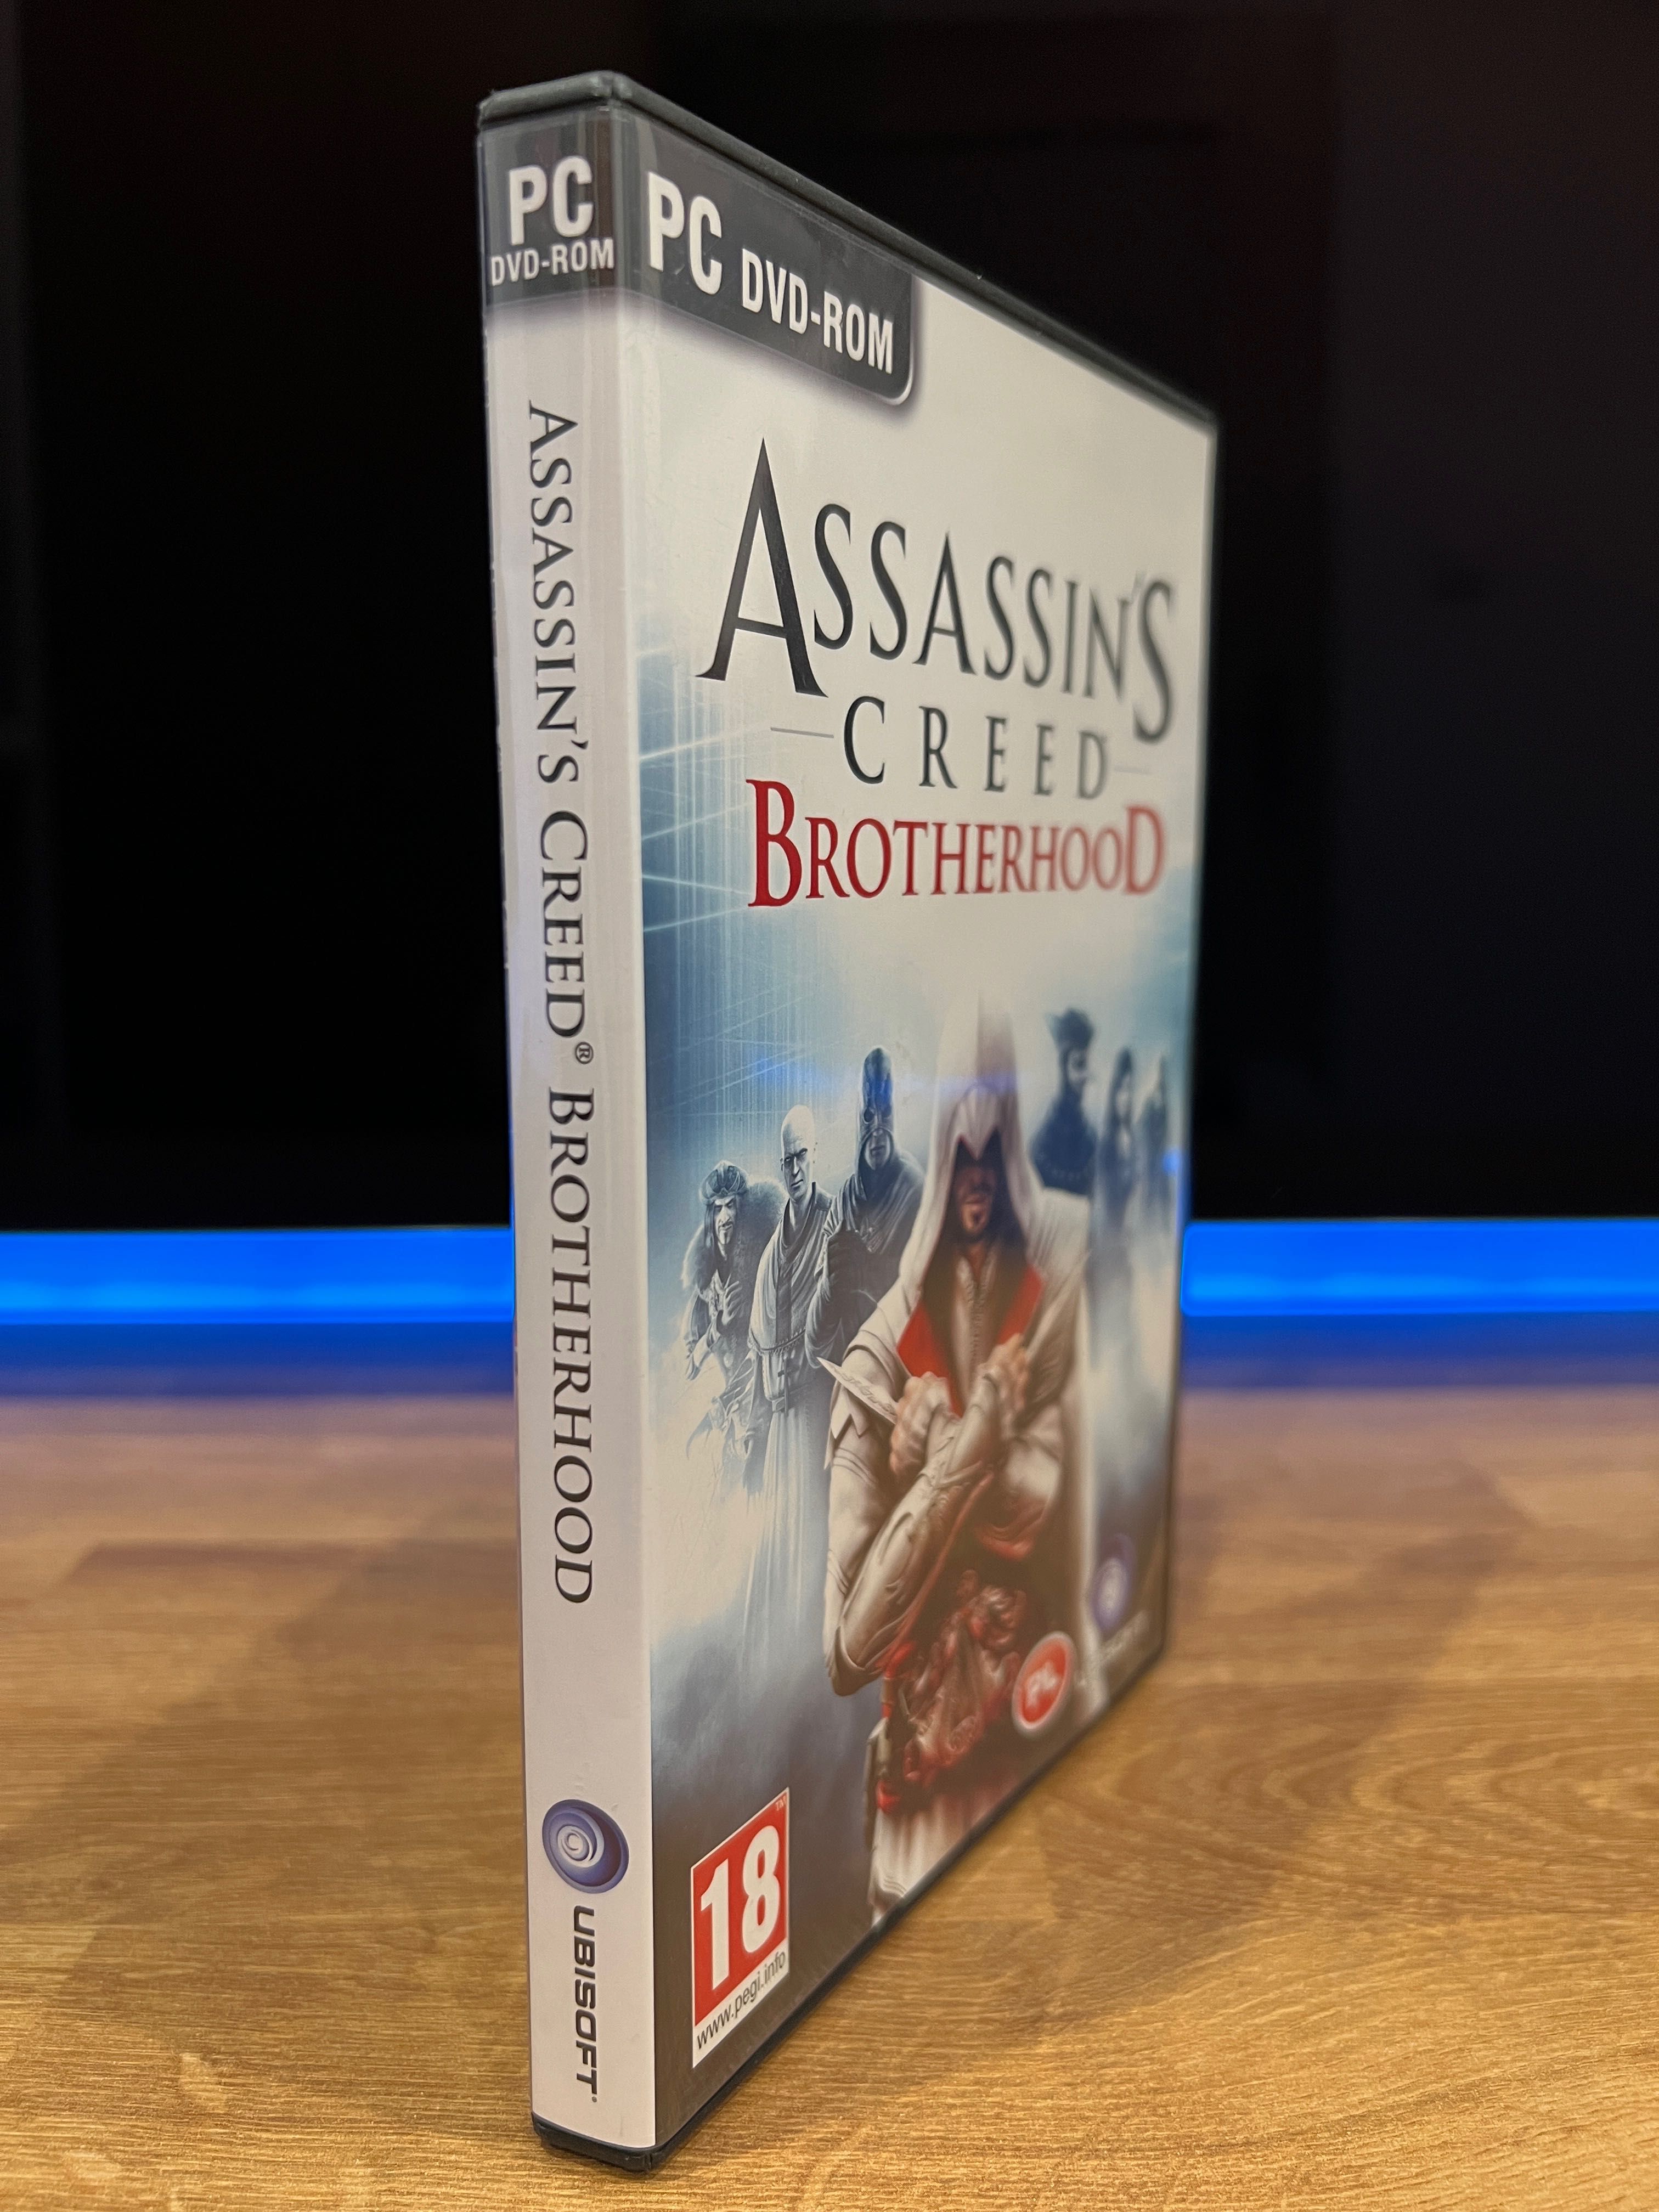 Assassin’s Creed Brotherhood (PC PL 2011) kompletne premierowe wydanie